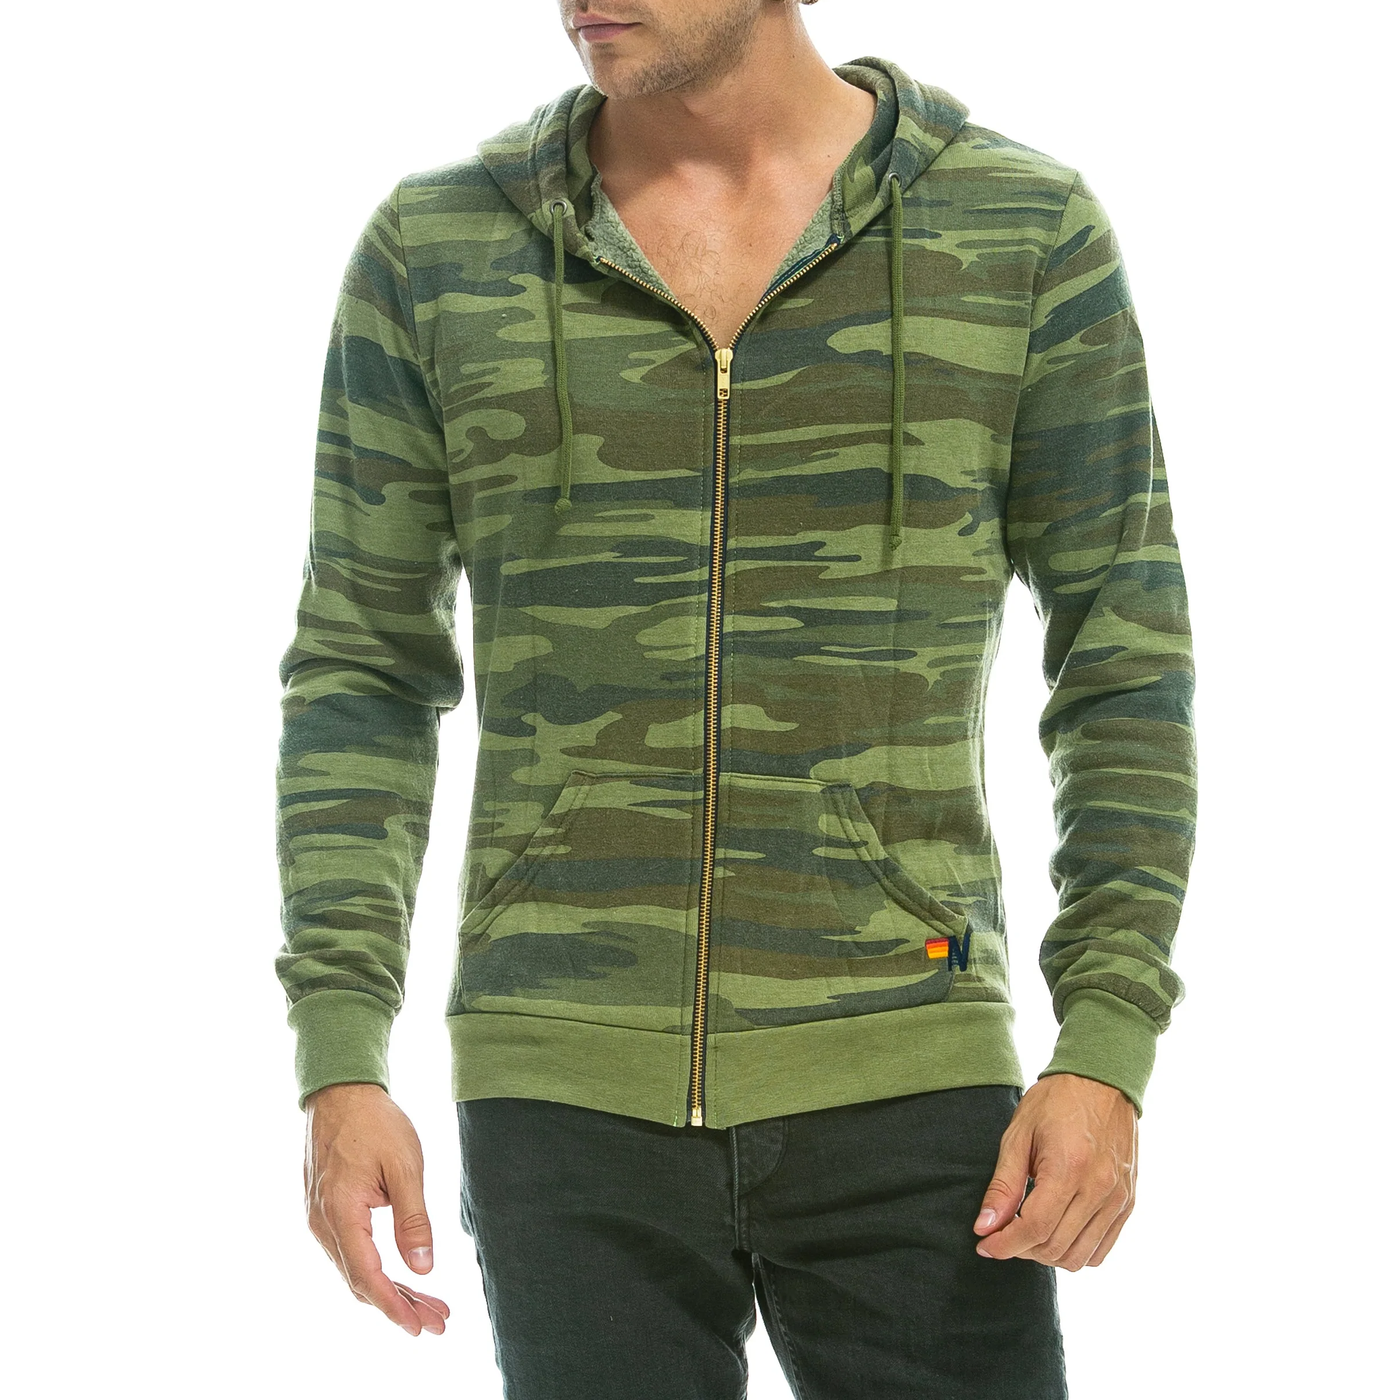 Gotstyle Fashion - Aviator Nation Sweatshirts Bolt Camo Zip Hoodie - Green